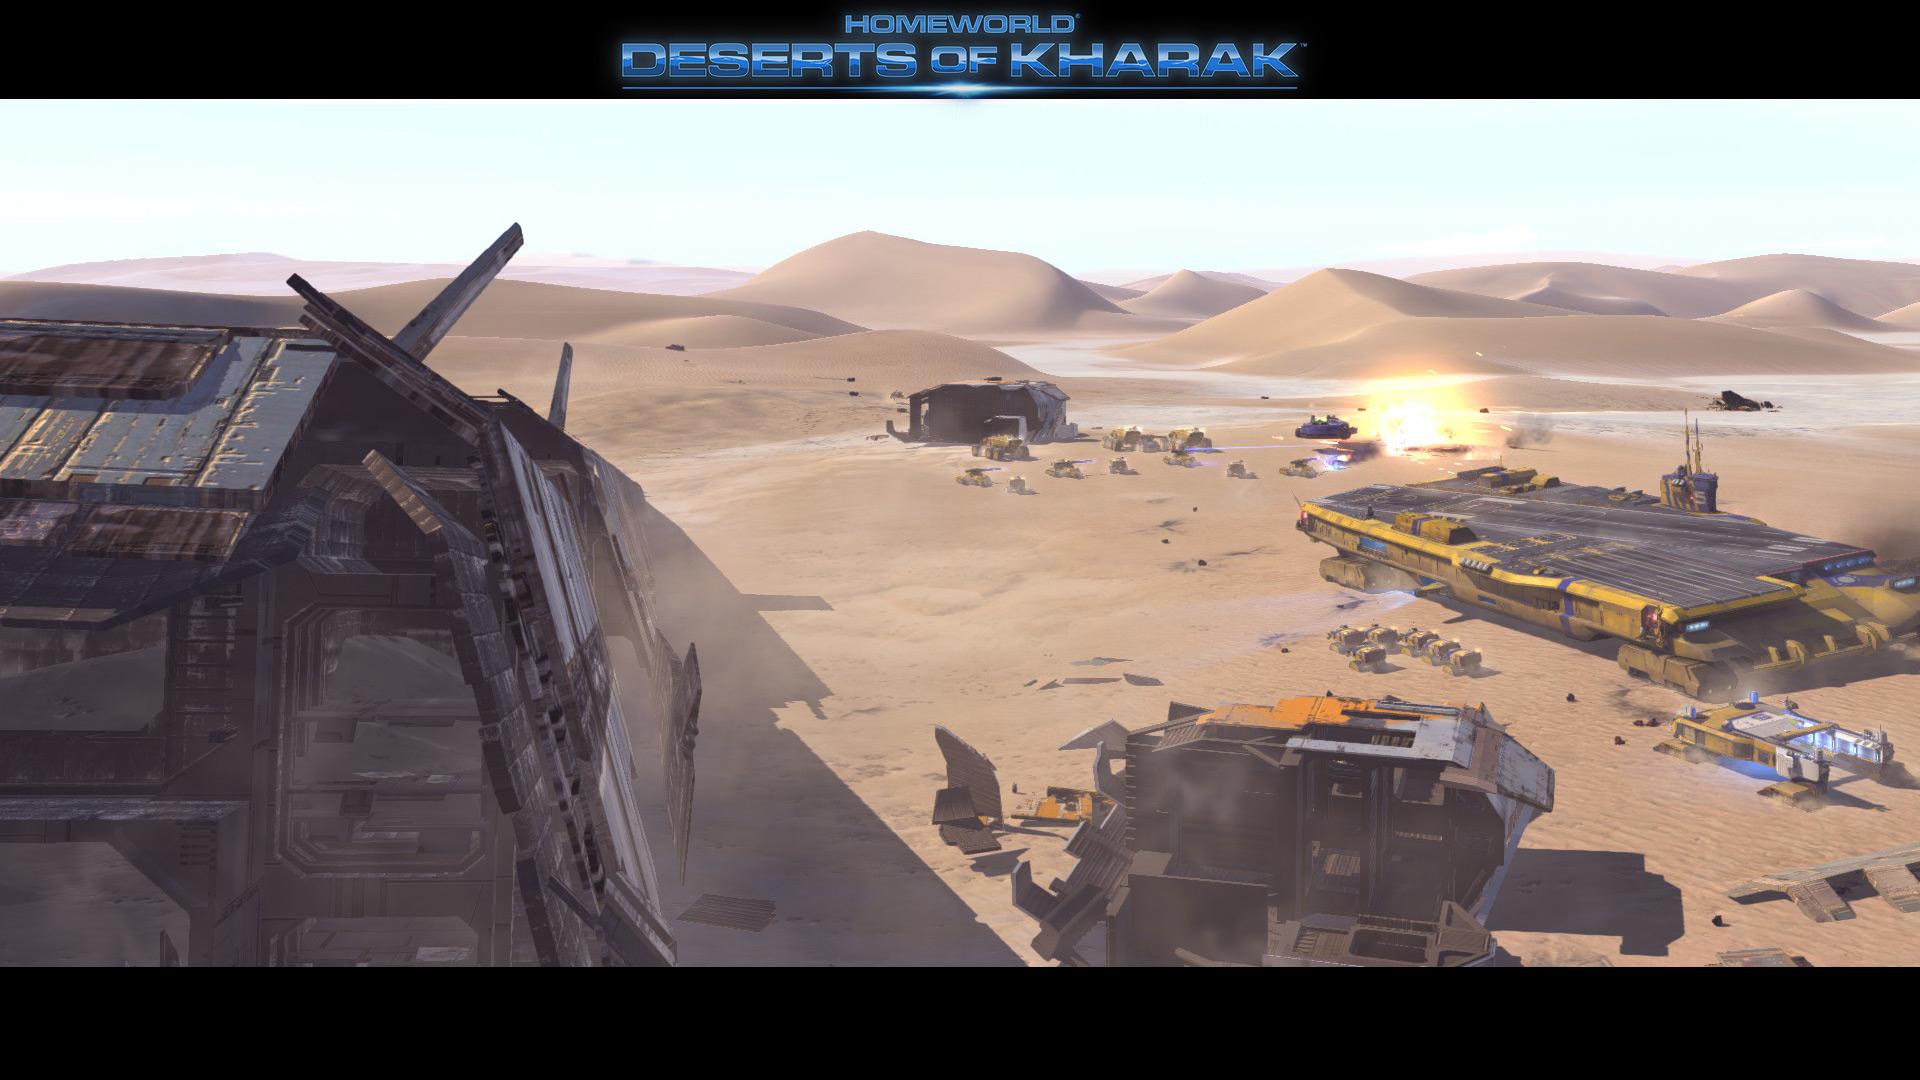 Homeworld Deserts Of Kharak at 1024 x 1024 iPad size wallpapers HD quality